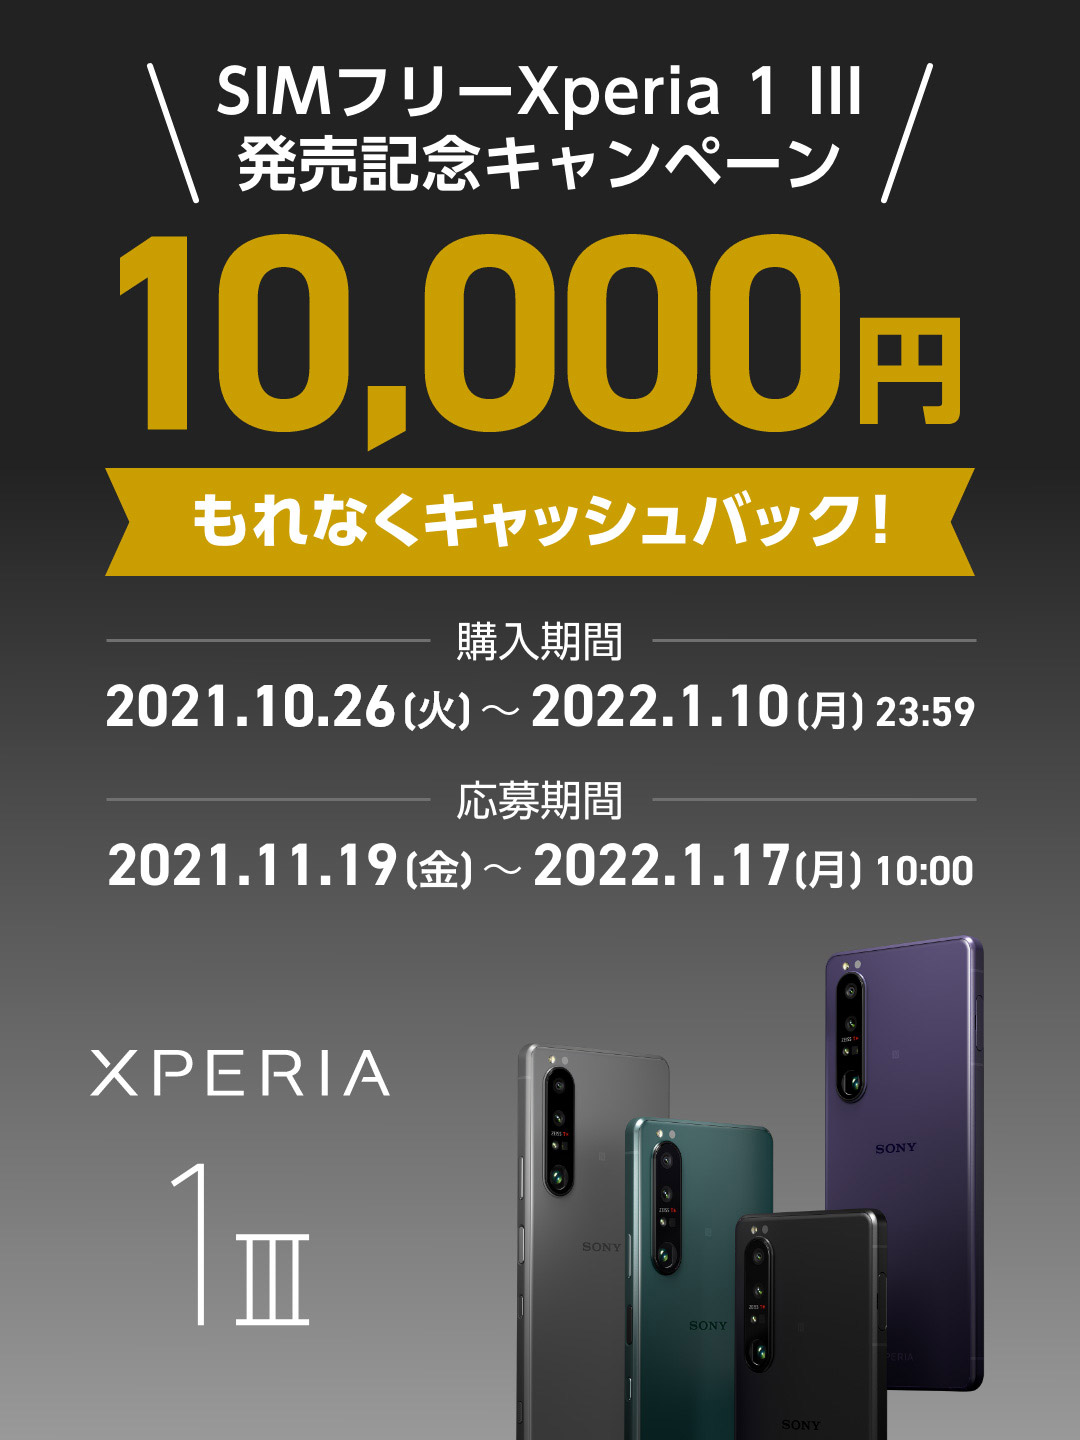 SIMフリーXperia 1 III発売記念キャンペーン 10,000円もれなくキャッシュバック！ 購入期間：2021.10.26[火]～2022.1.10[月]23:59 応募期間：2021.11.19[金]～2022.1.17[月]10:00